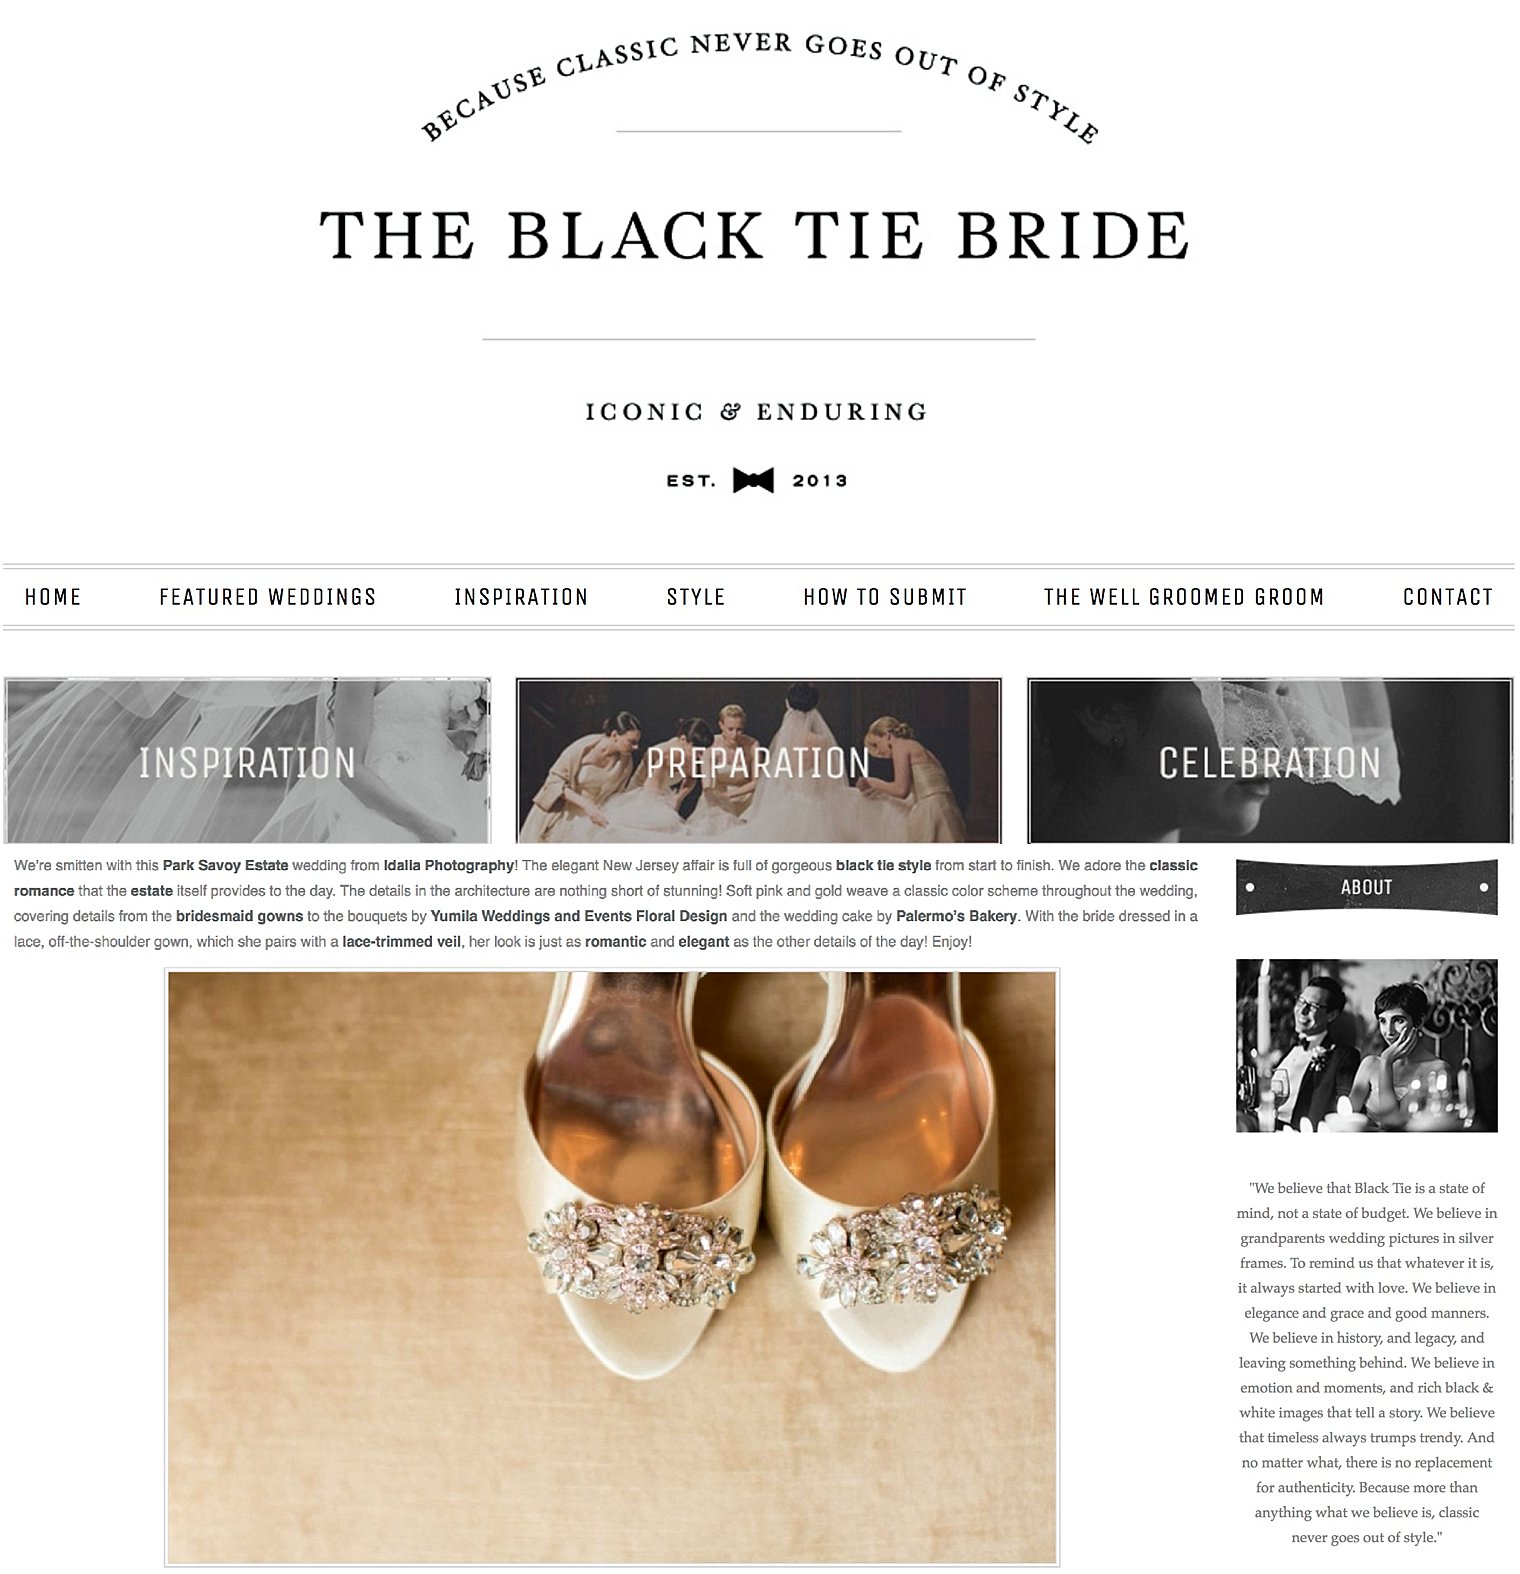 Park Savoy Wedding Published on The Black Tie Bride